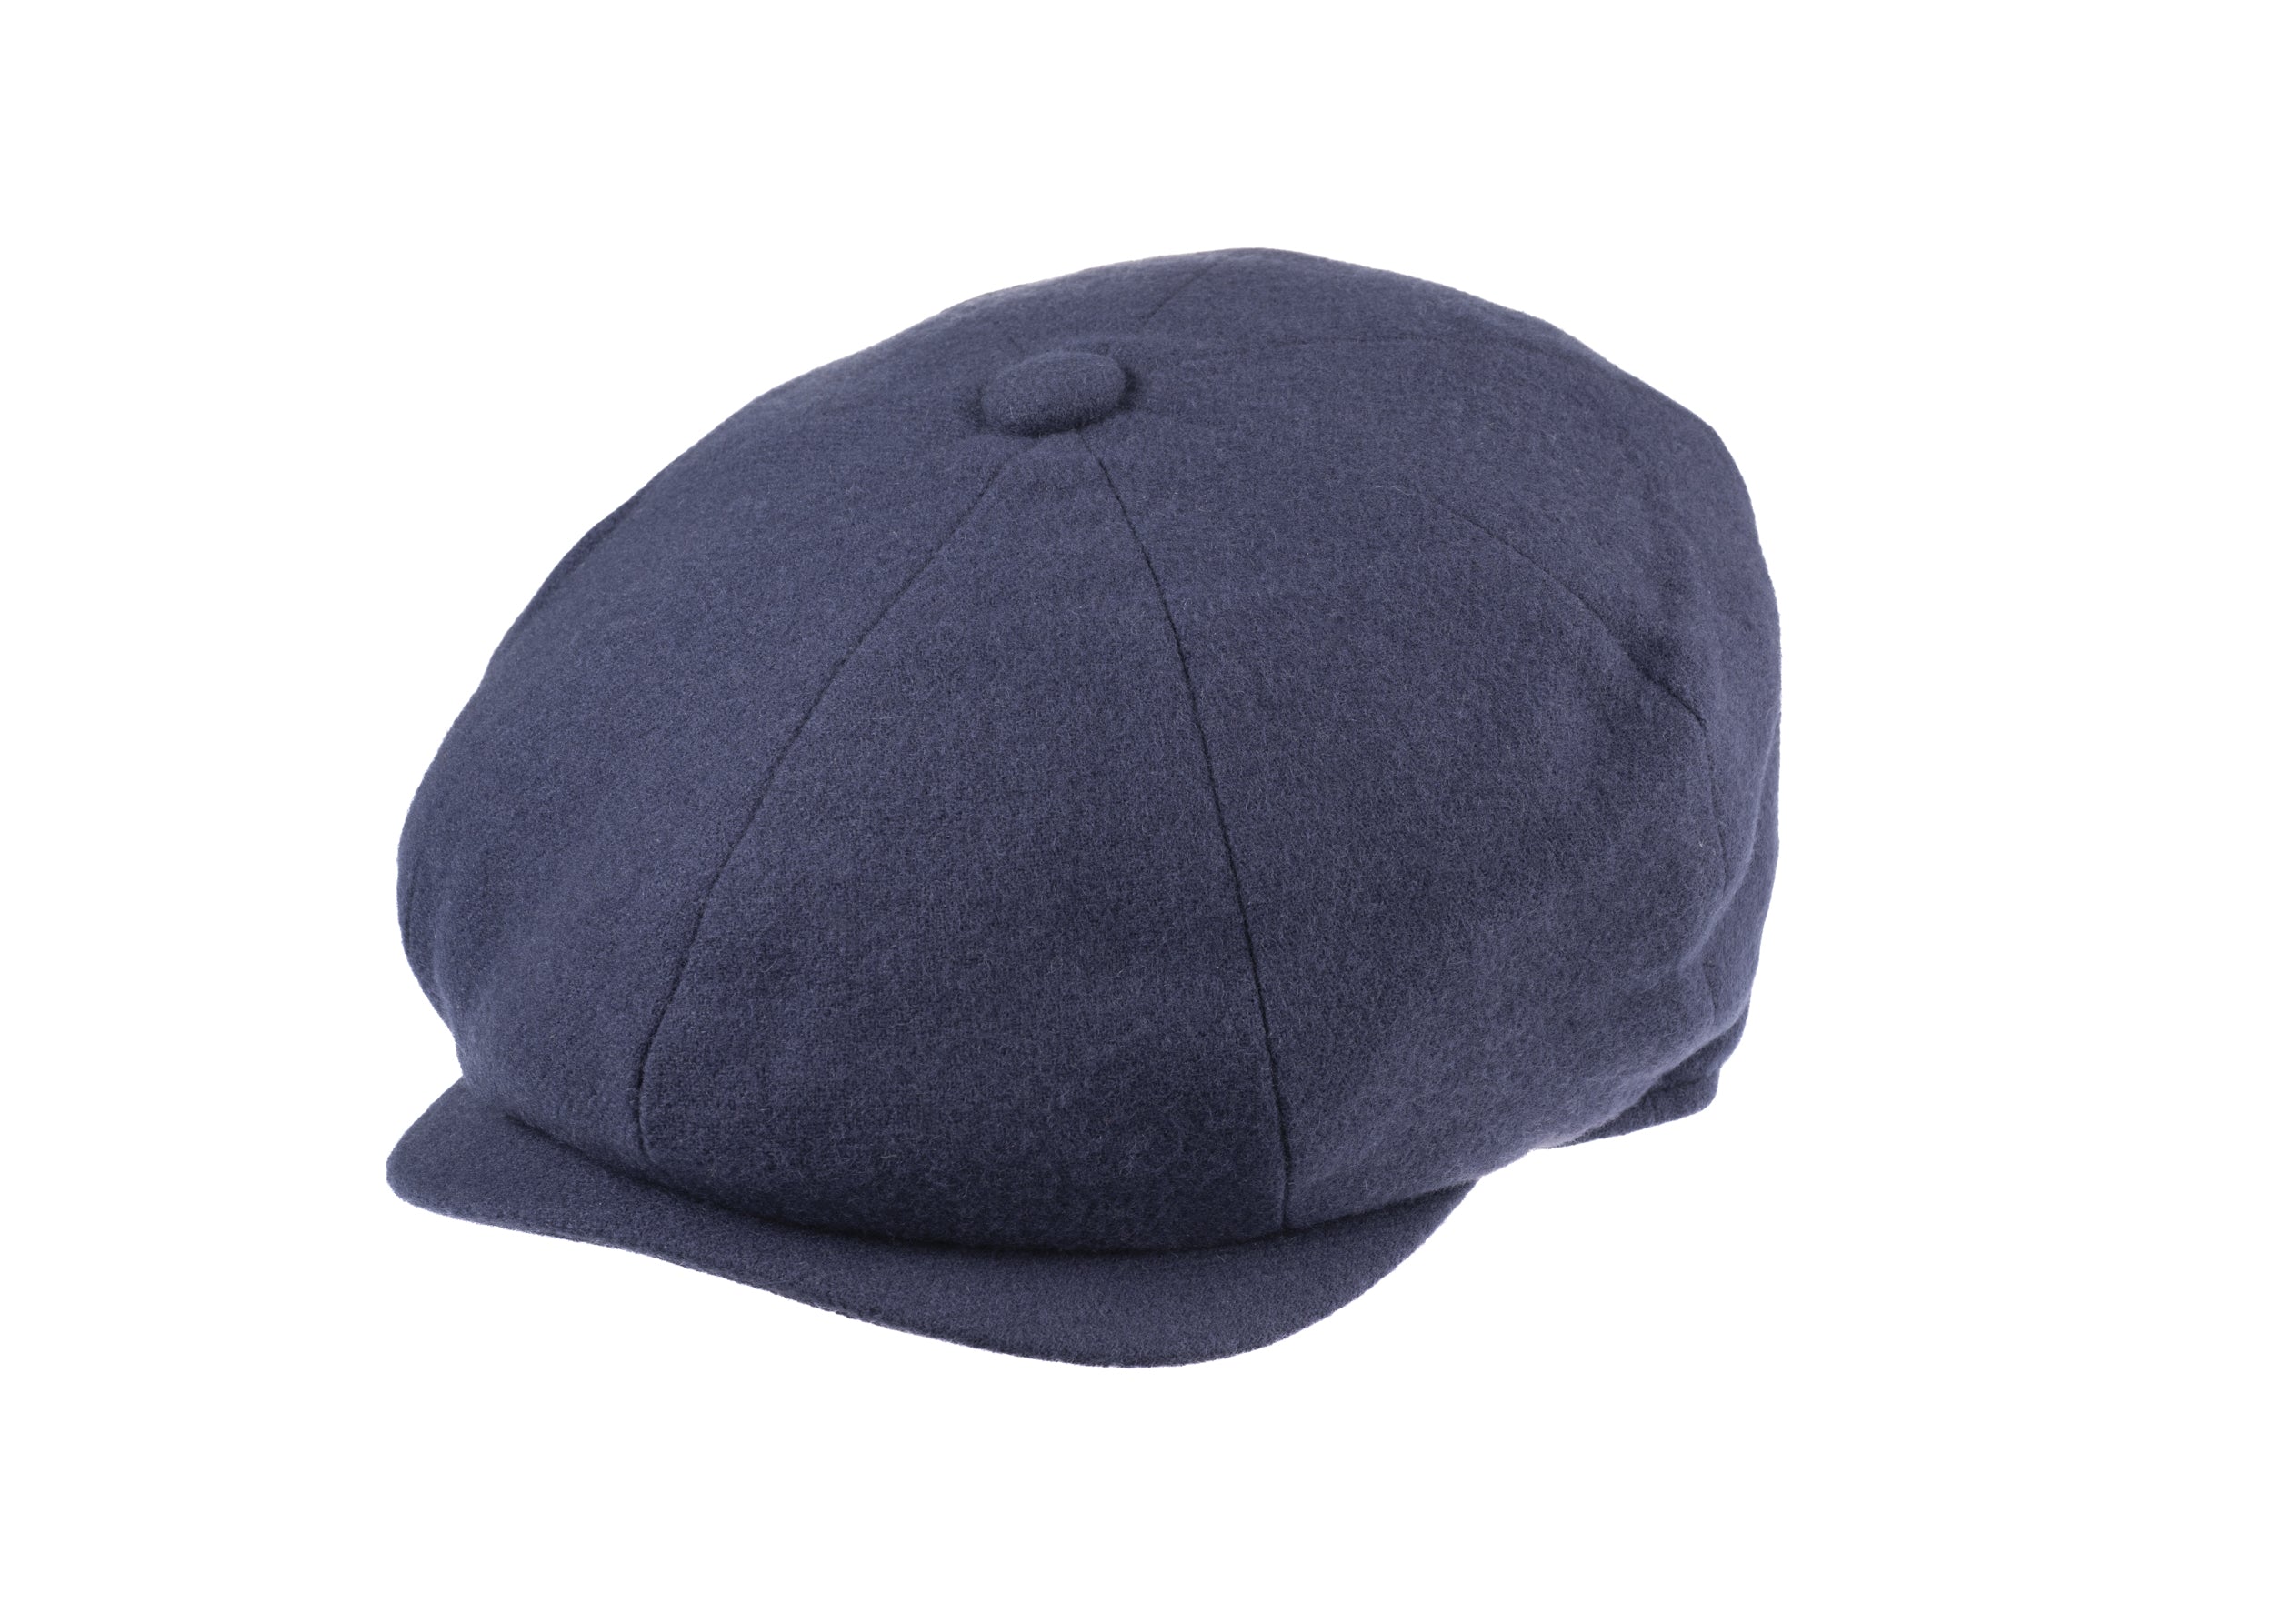 Josh 8 piece baker boy cap in cashmere/wool blend fabric in Blue